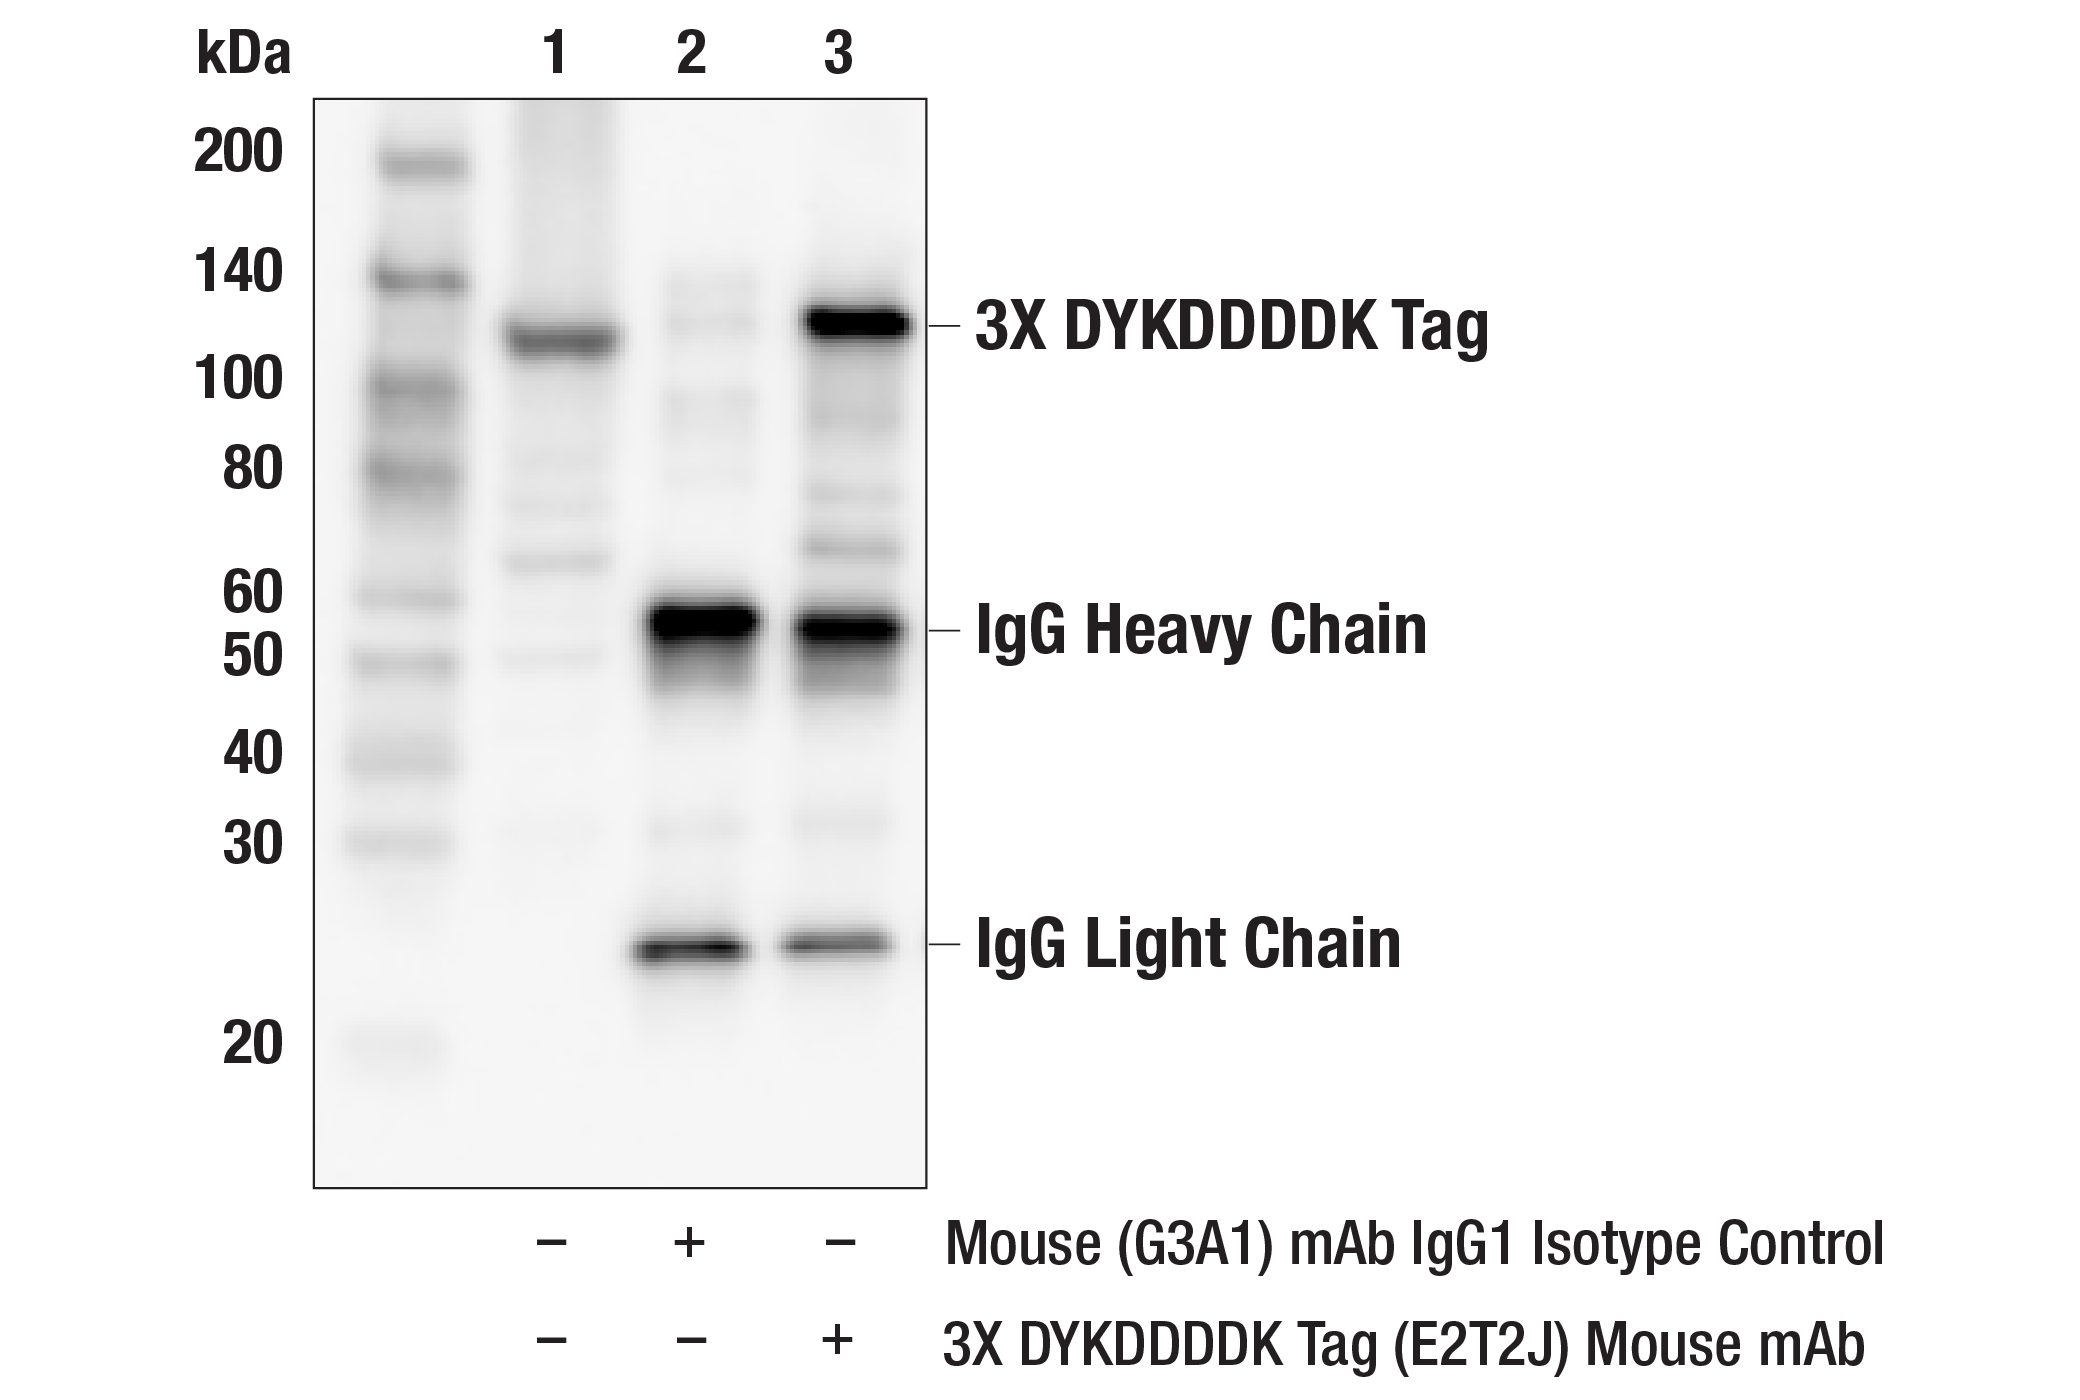 Immunoprecipitation Image 1: 3X DYKDDDDK Tag (E2T2J) Mouse mAb (Binds to same epitope as Sigma-Aldrich Anti-FLAG M2 antibody)